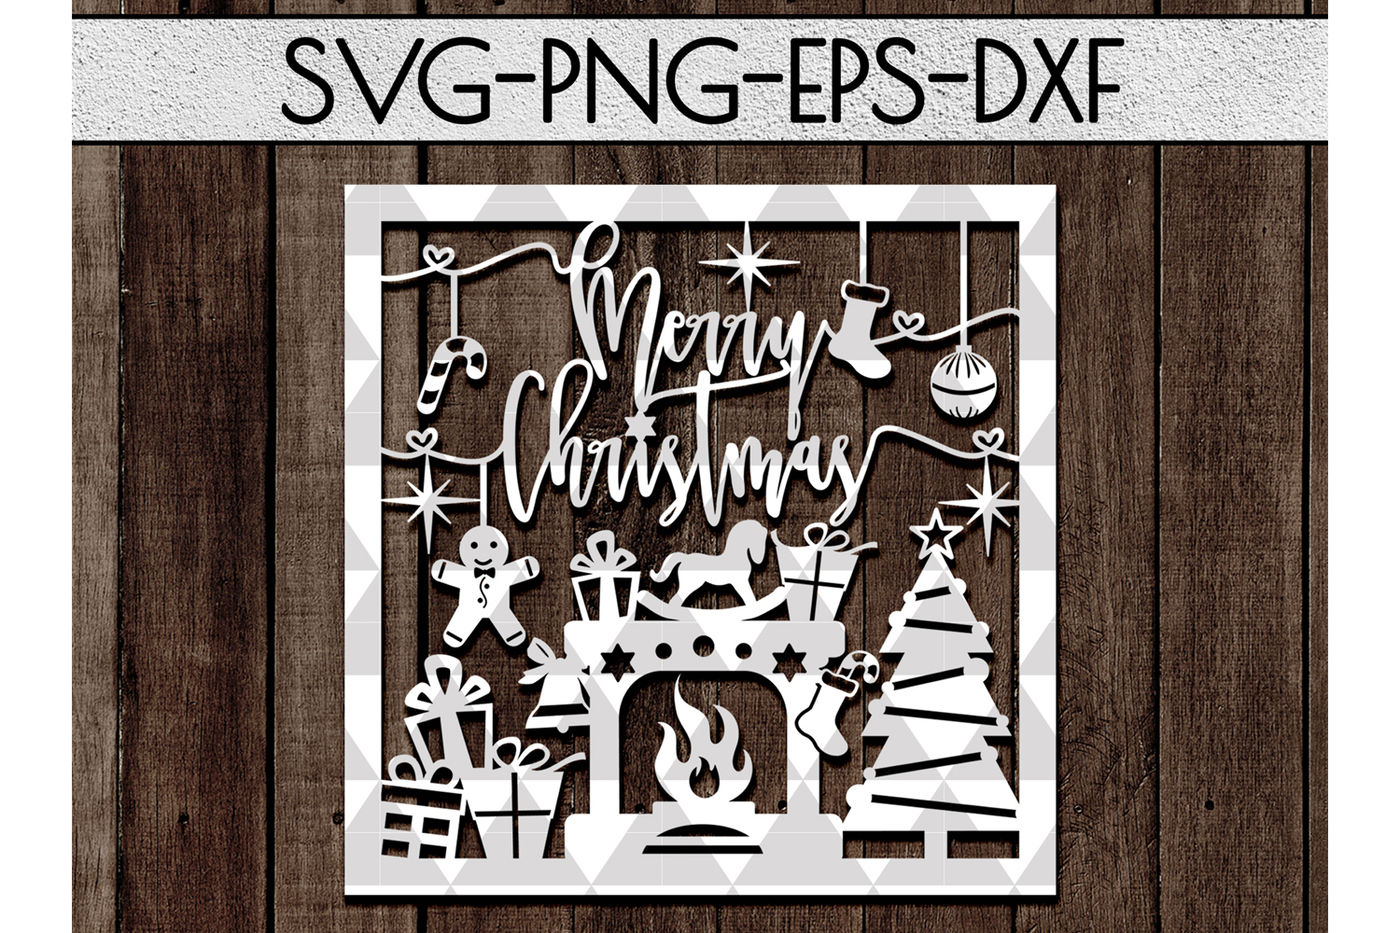 Merry Christmas Svg Cutting File Xmas Gift Papercut Dxf Pdf By Mulia Designs Thehungryjpeg Com